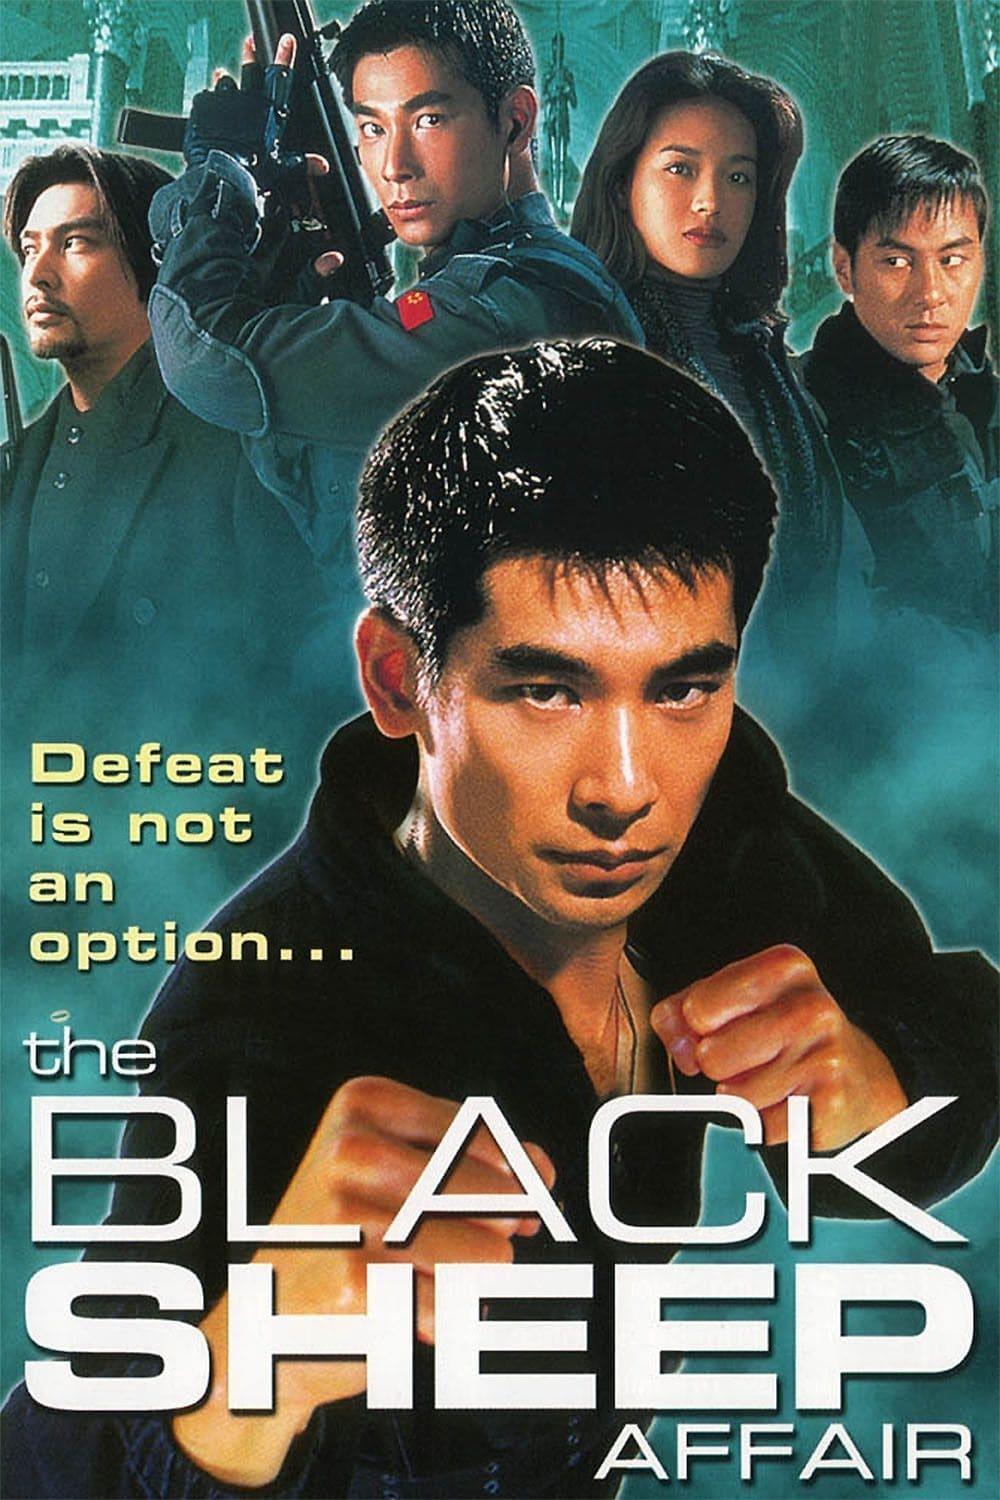 The Blacksheep Affair poster